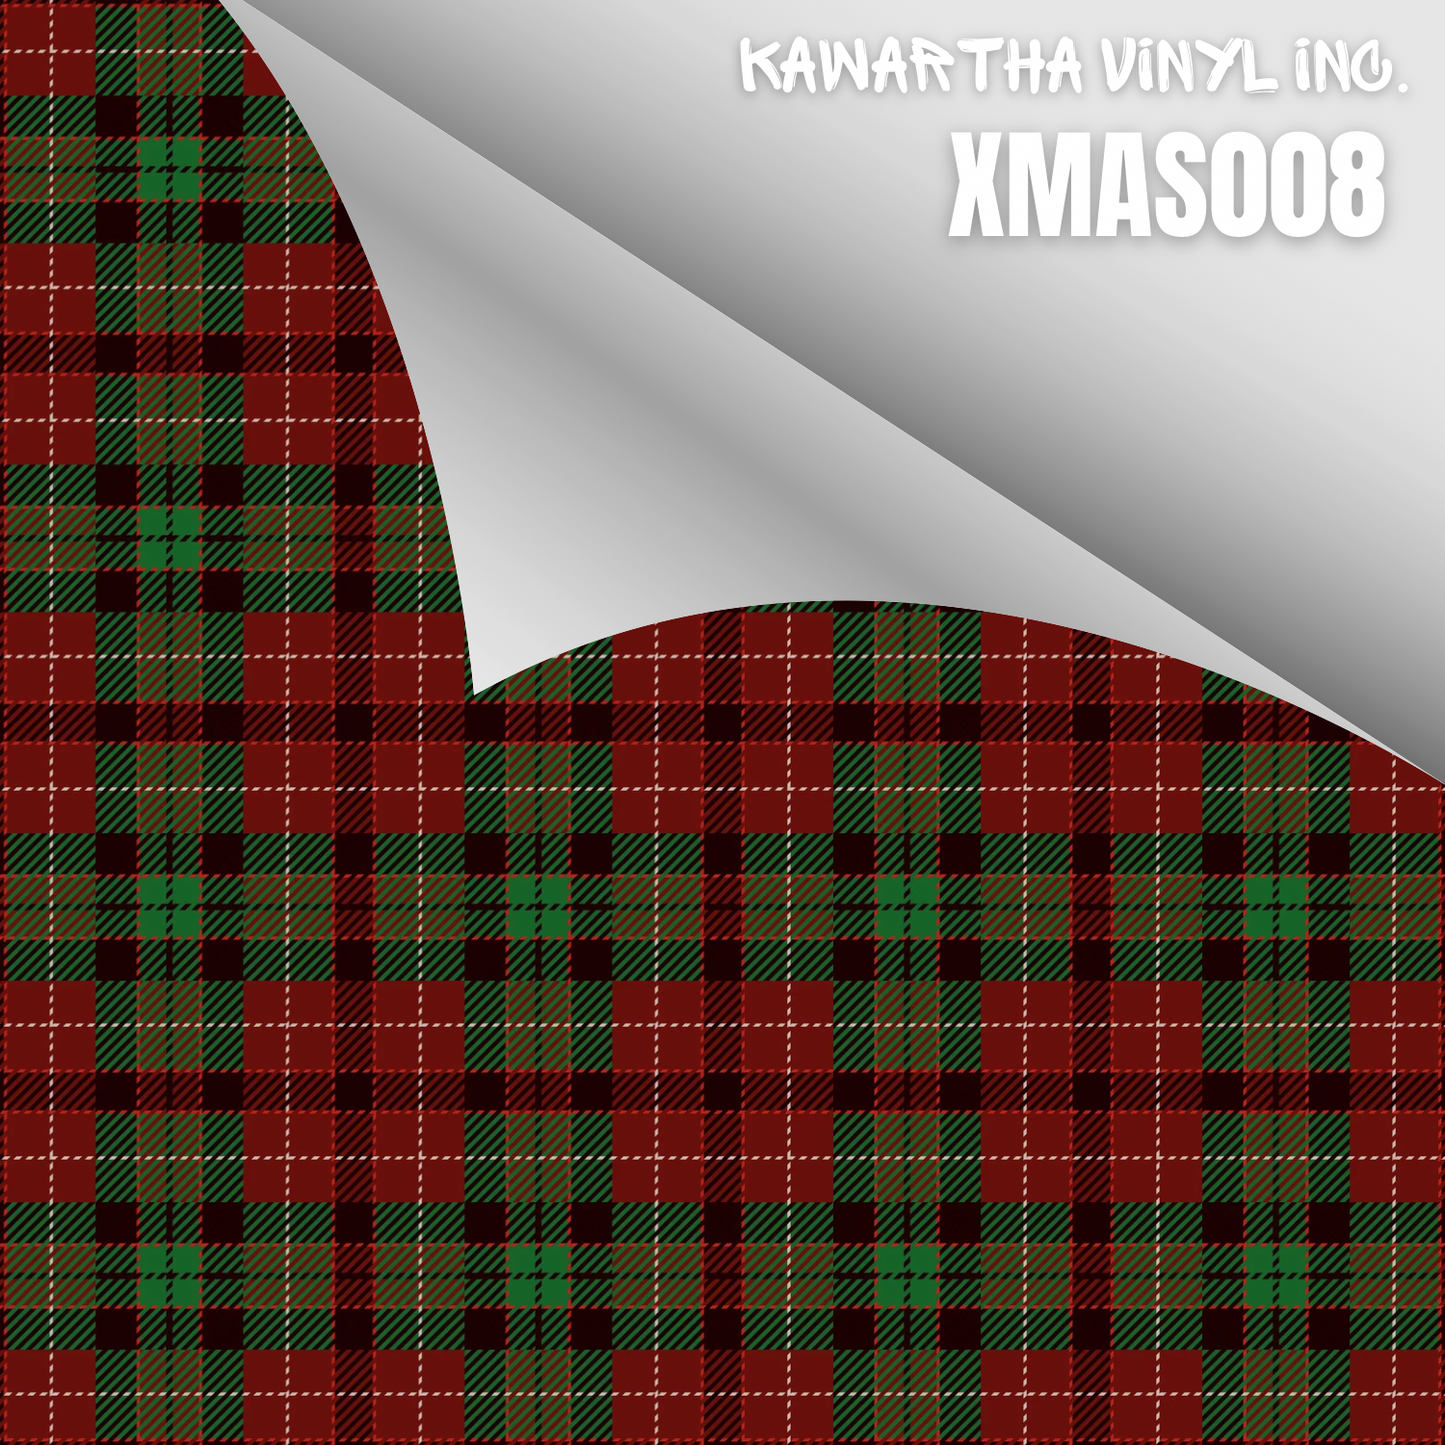 XMAS008 Adhesive & HTV Patterns